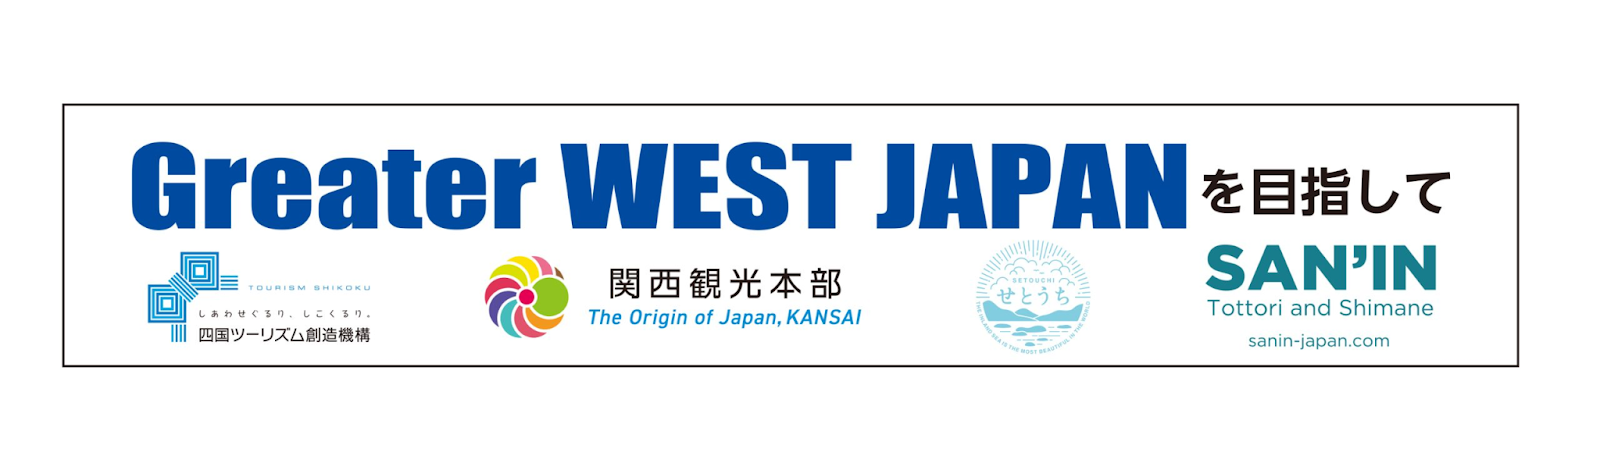 Greater WEST JAPAN（西日本広域周遊観光）